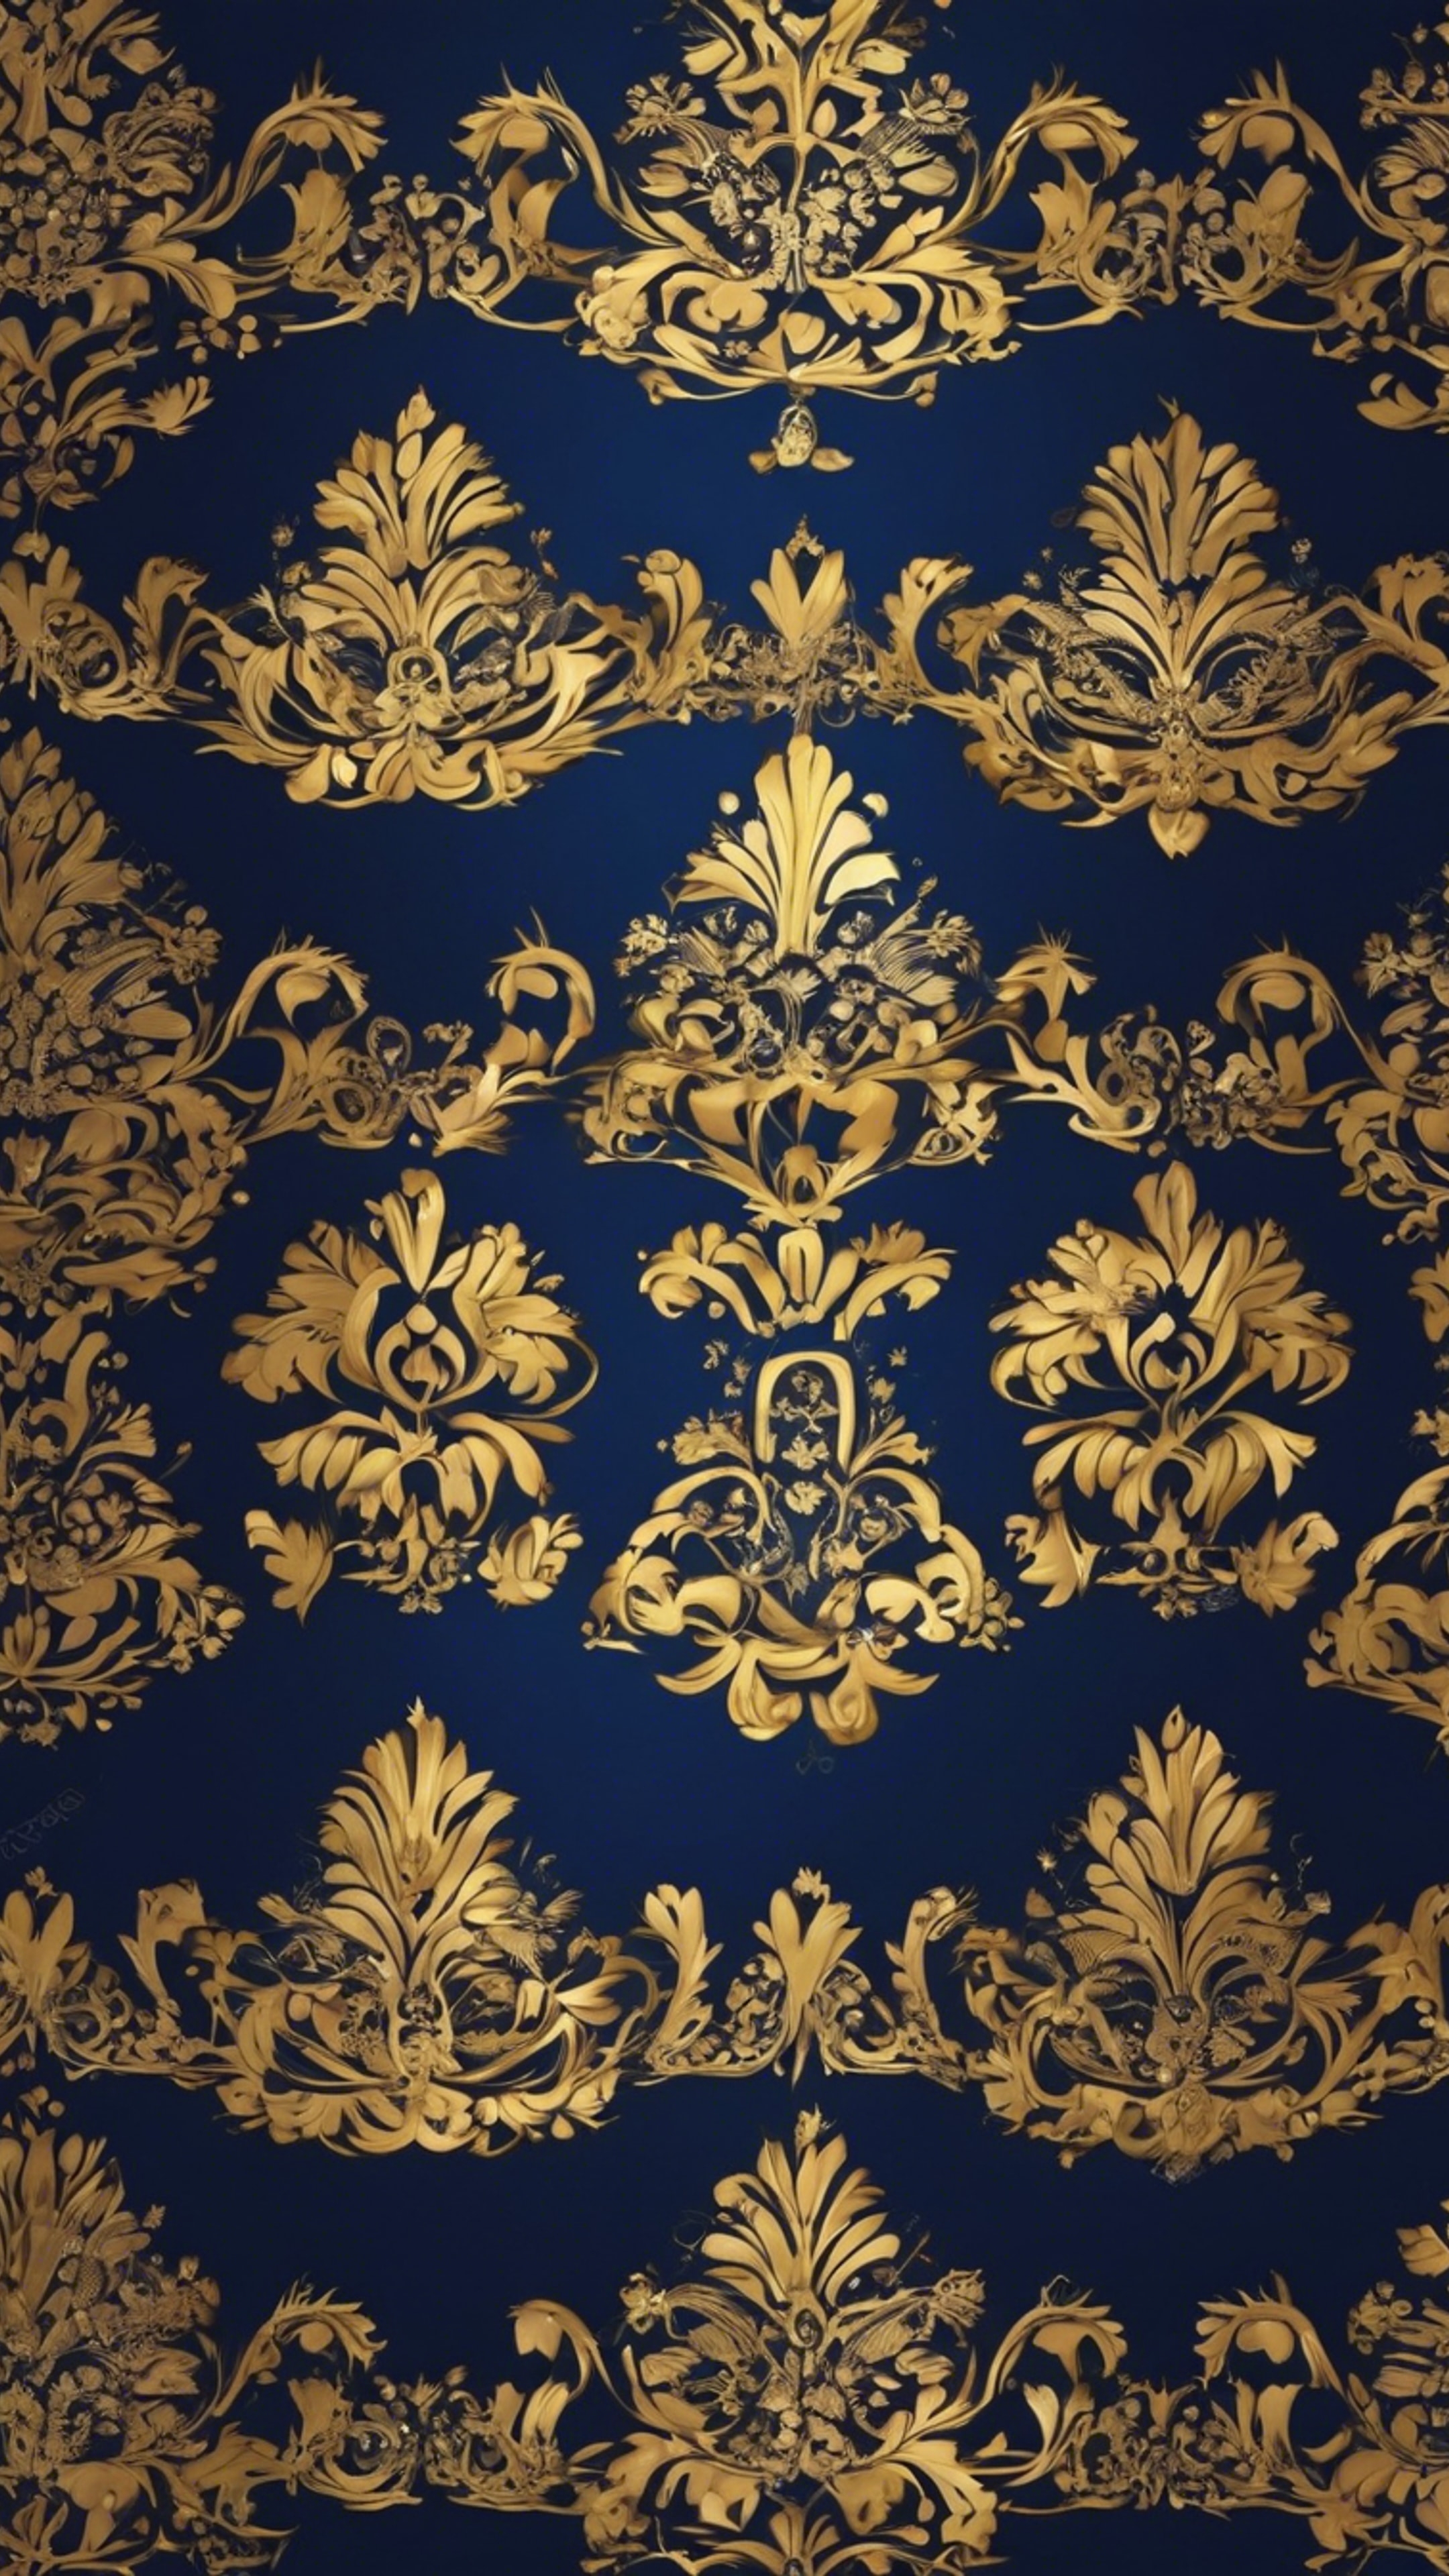 Royal golden damask on a midnight blue background Wallpaper[22484095d1454c8983f2]